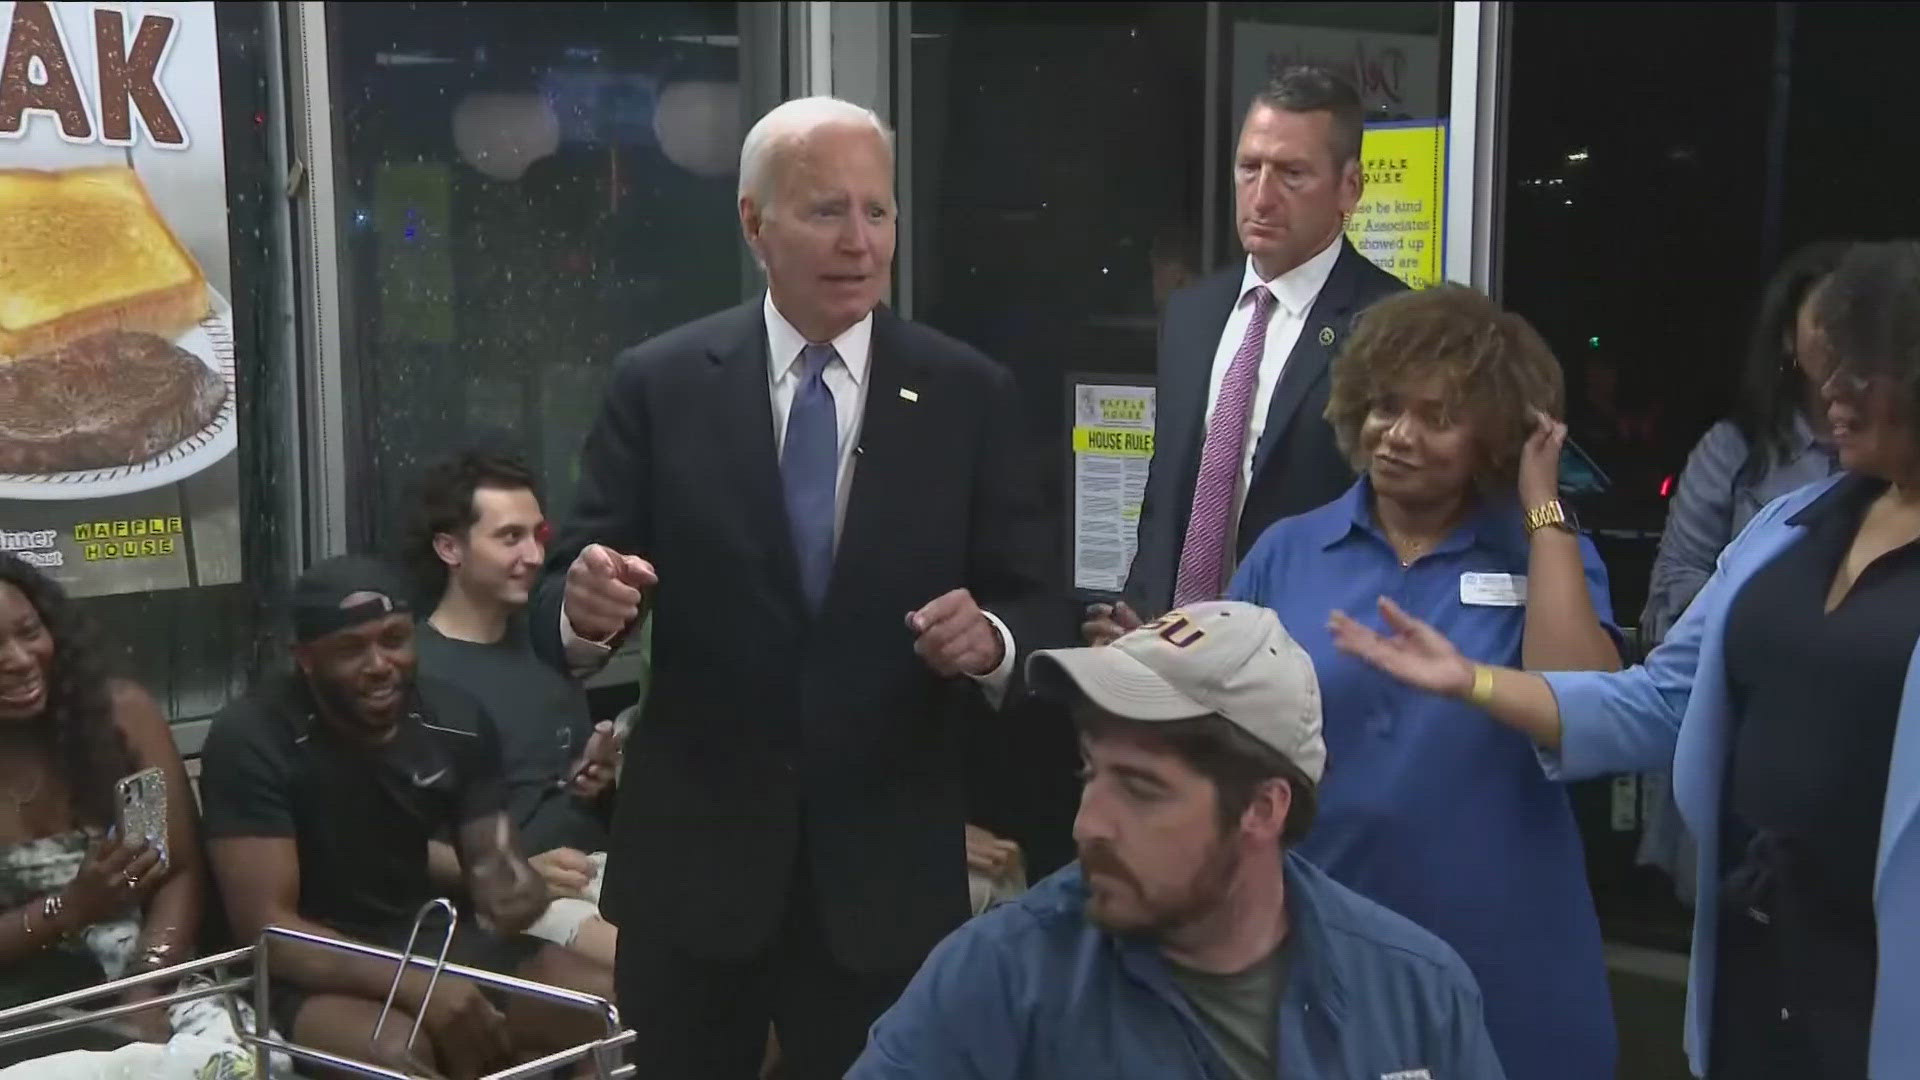 Following last night's presidential debate in Atlanta, President Biden visited a Waffle House near Truist Park.